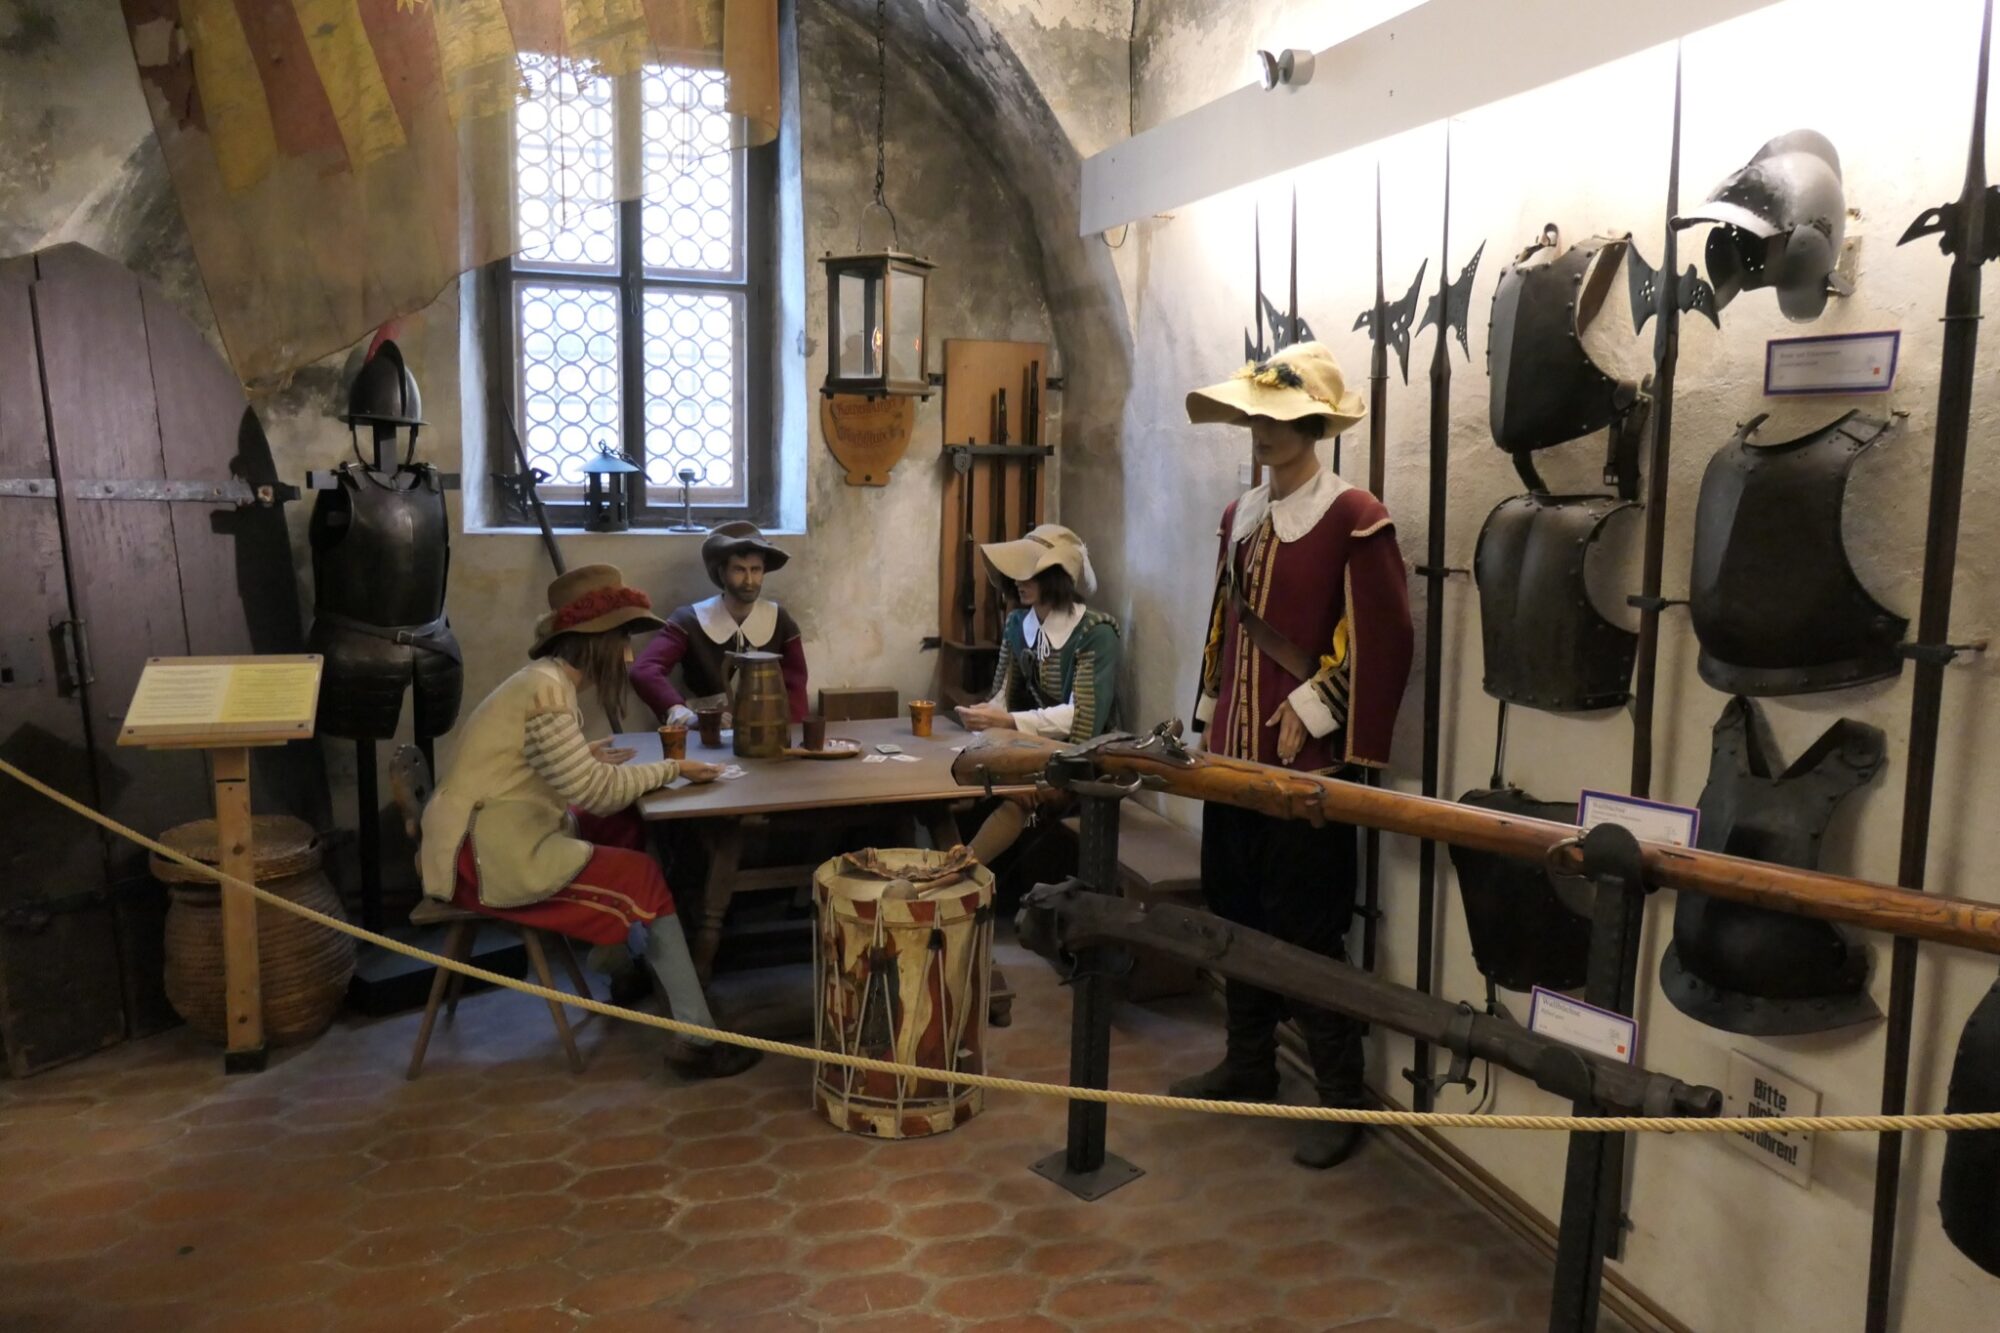 Medieval armors and fashion on display.